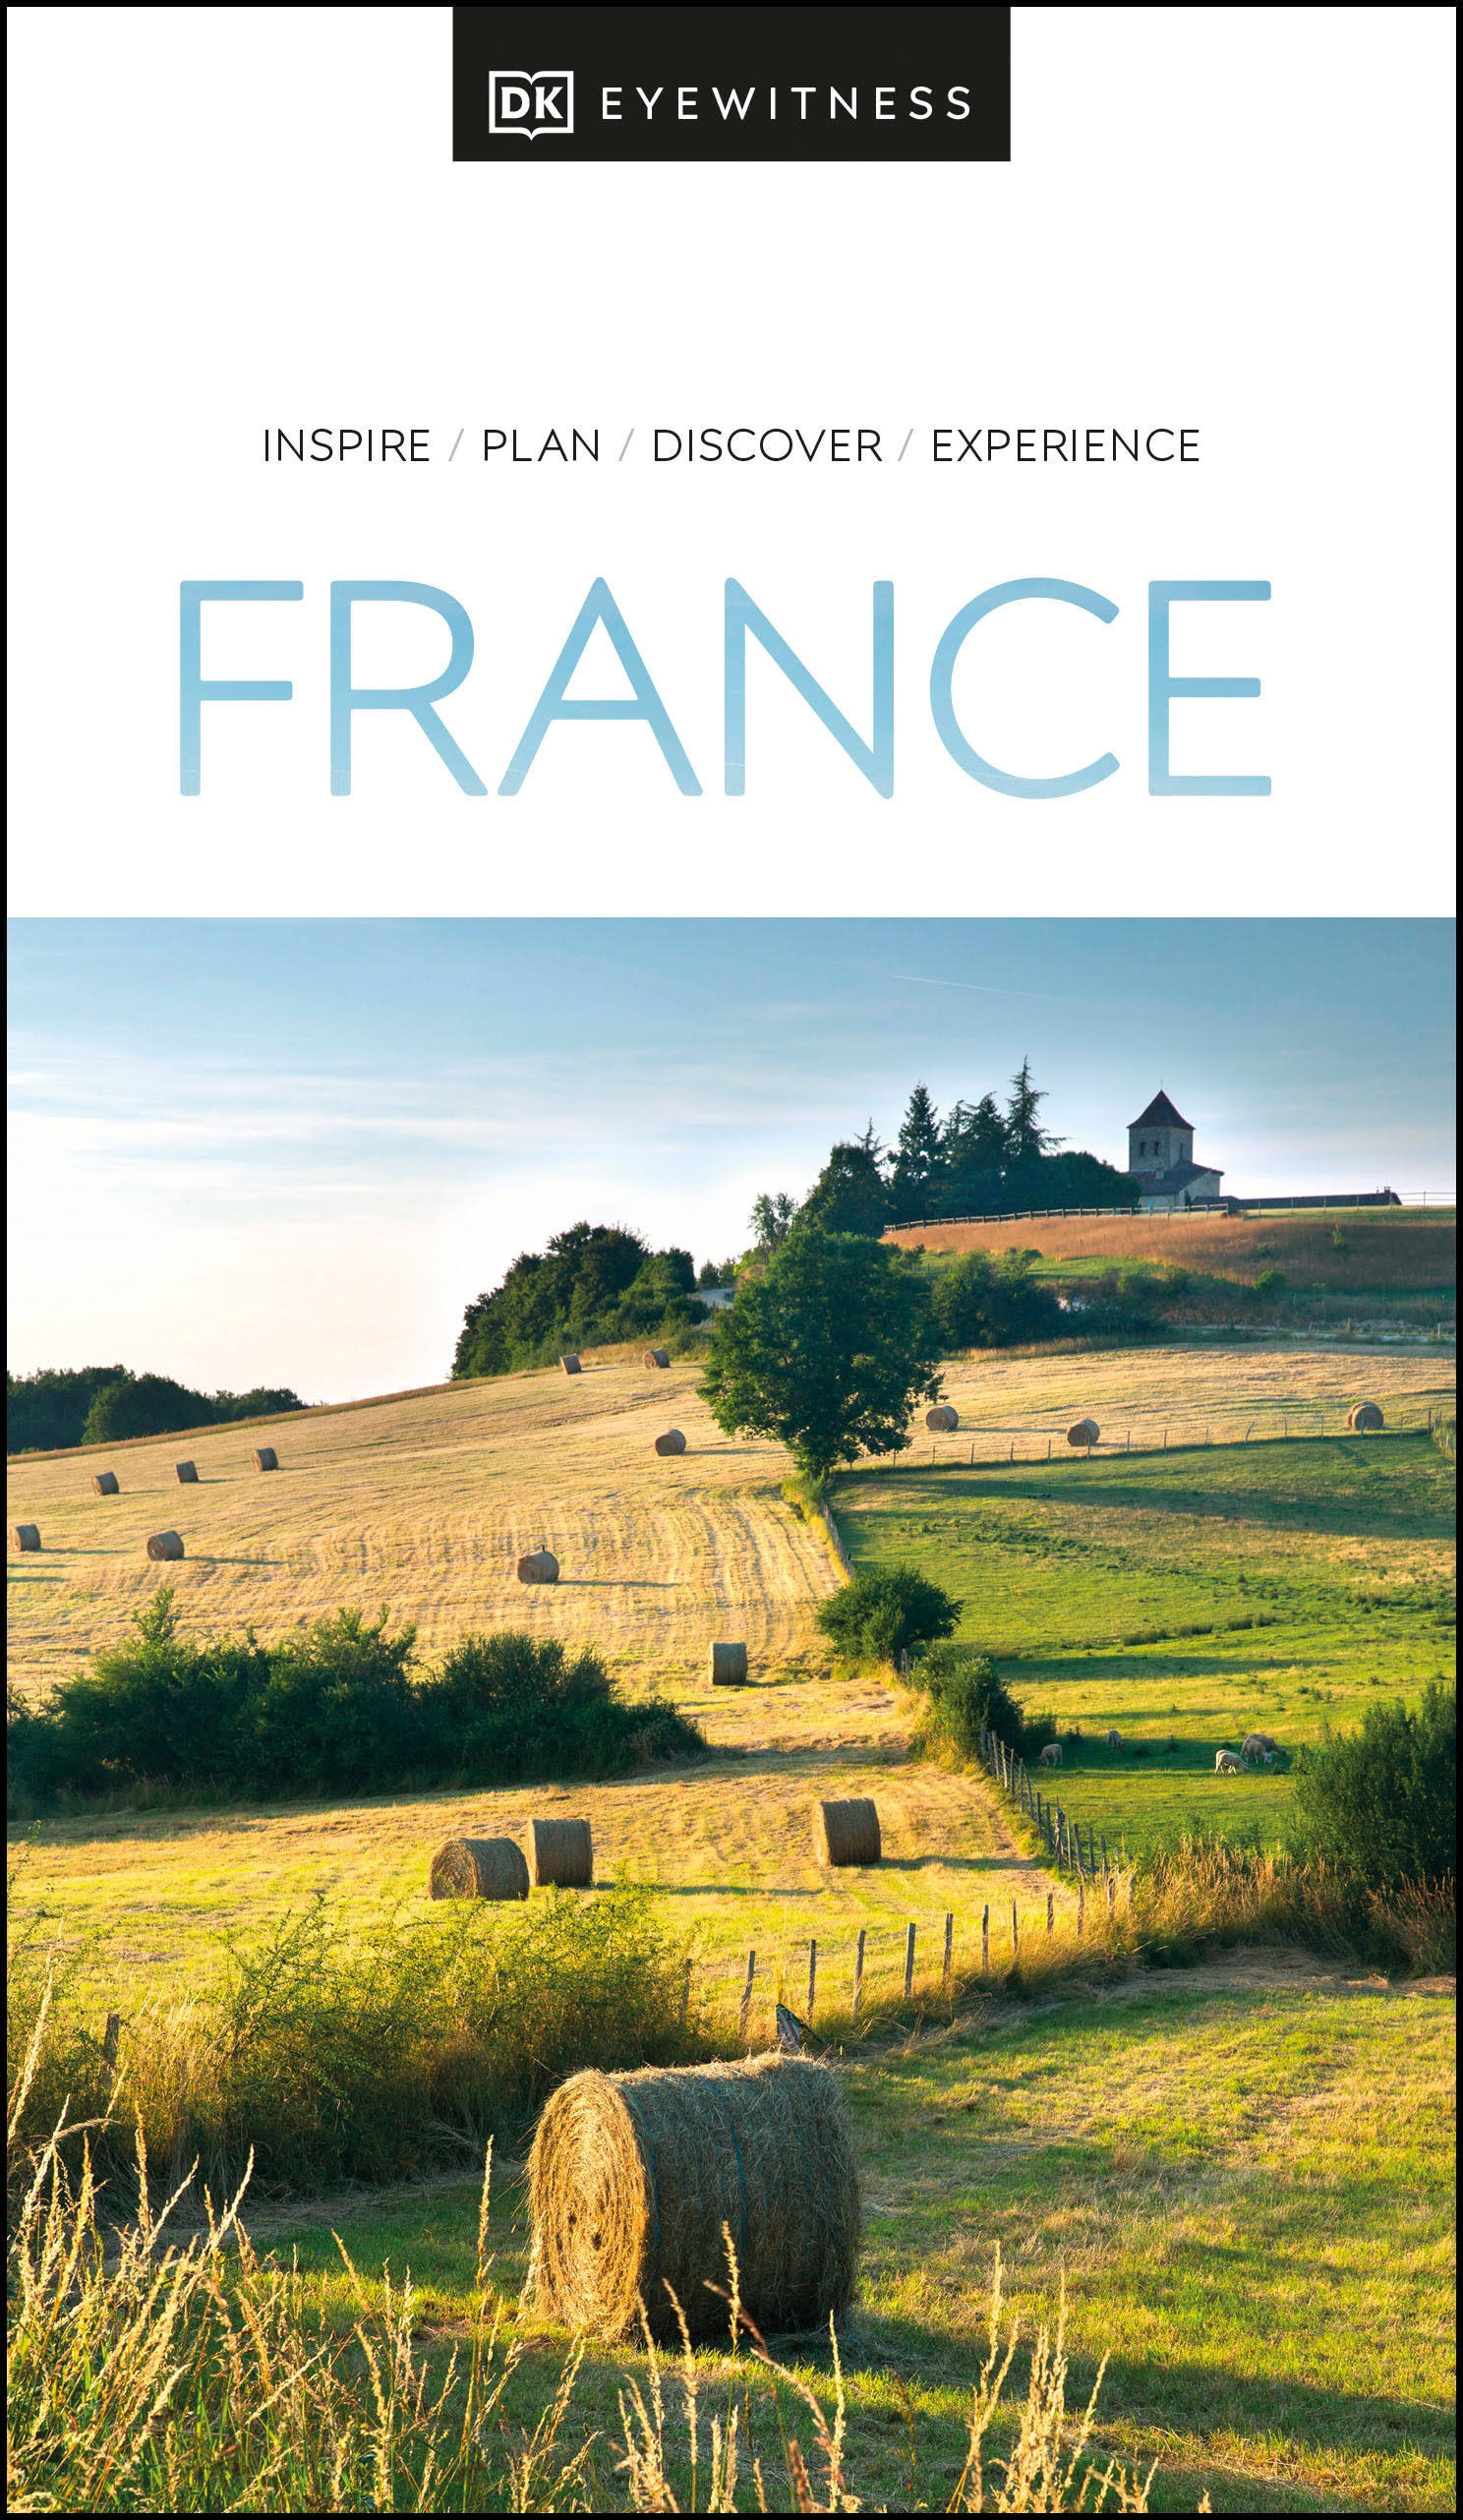 DK Eyewitness France [Book]